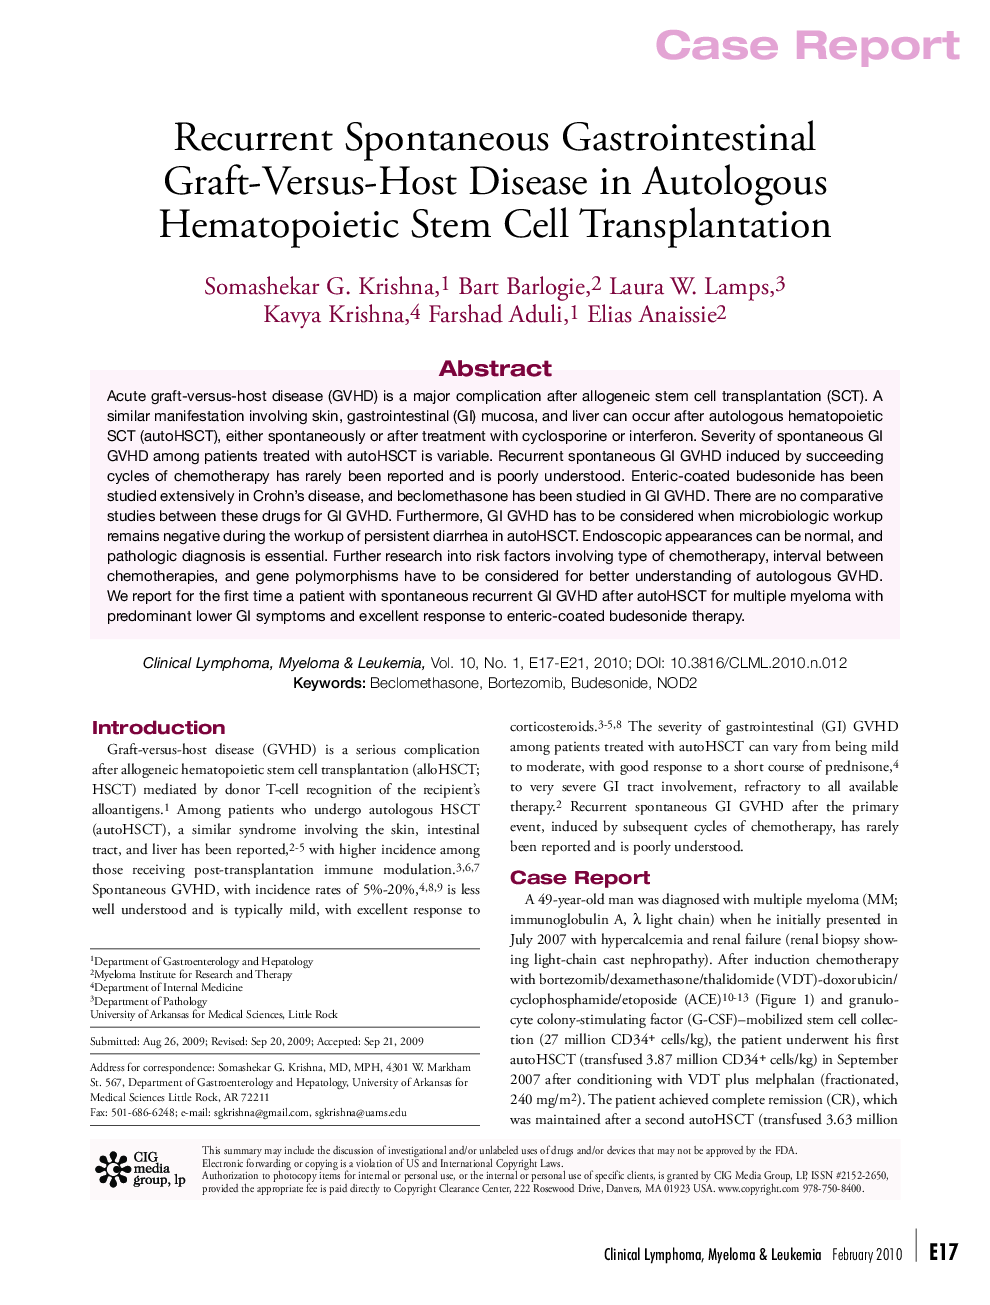 Recurrent Spontaneous Gastrointestinal Graft-Versus-Host Disease in Autologous Hematopoietic Stem Cell Transplantation 